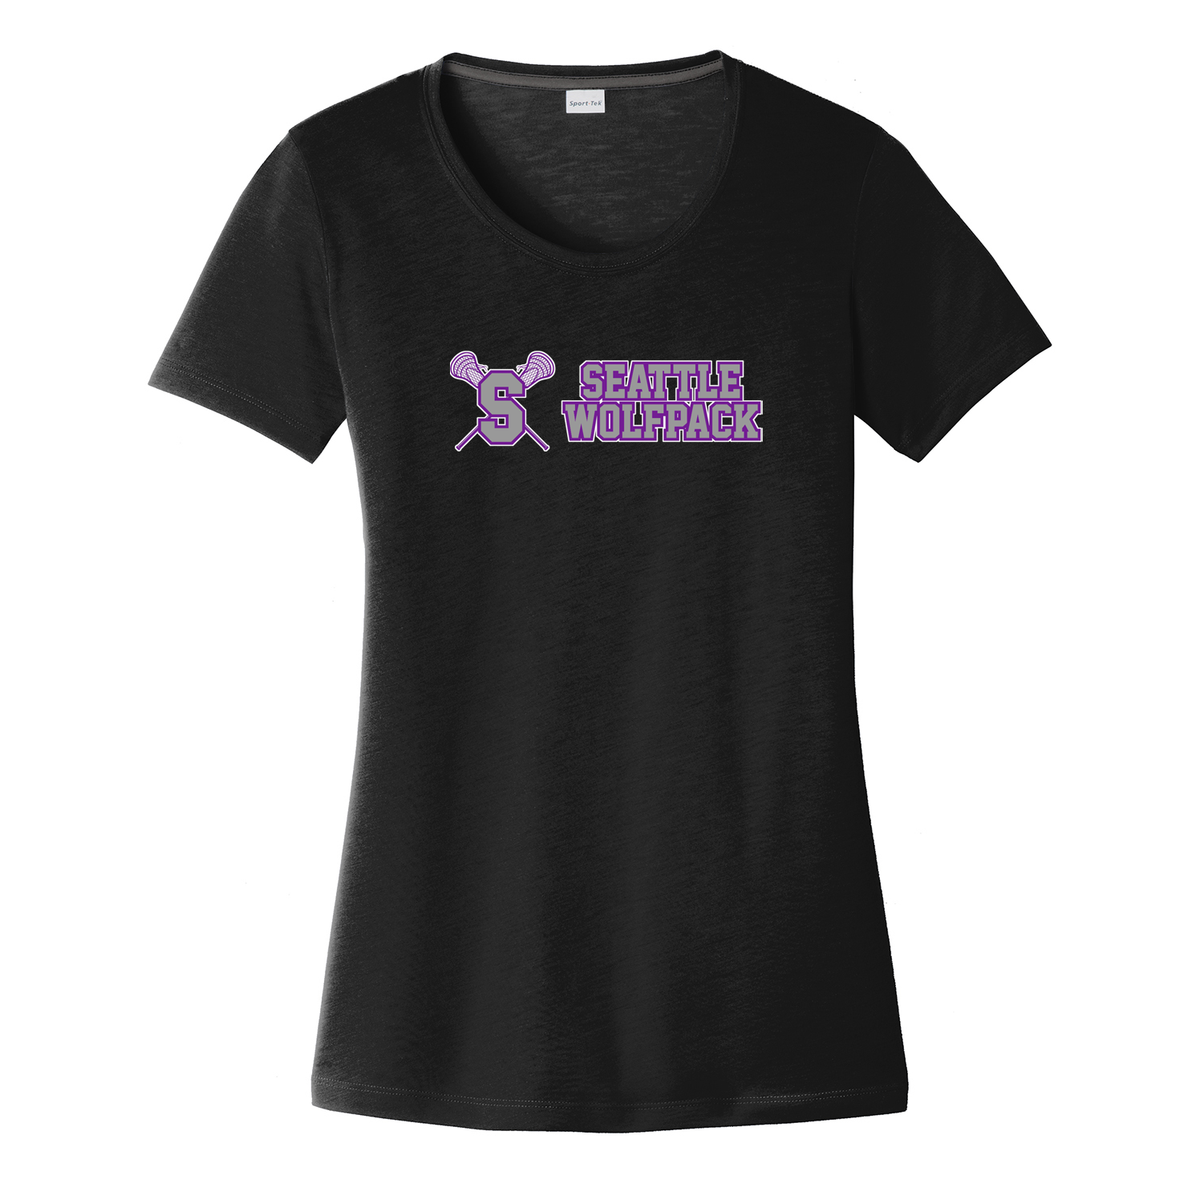 Seattle Wolfpack Women's CottonTouch Performance T-Shirt